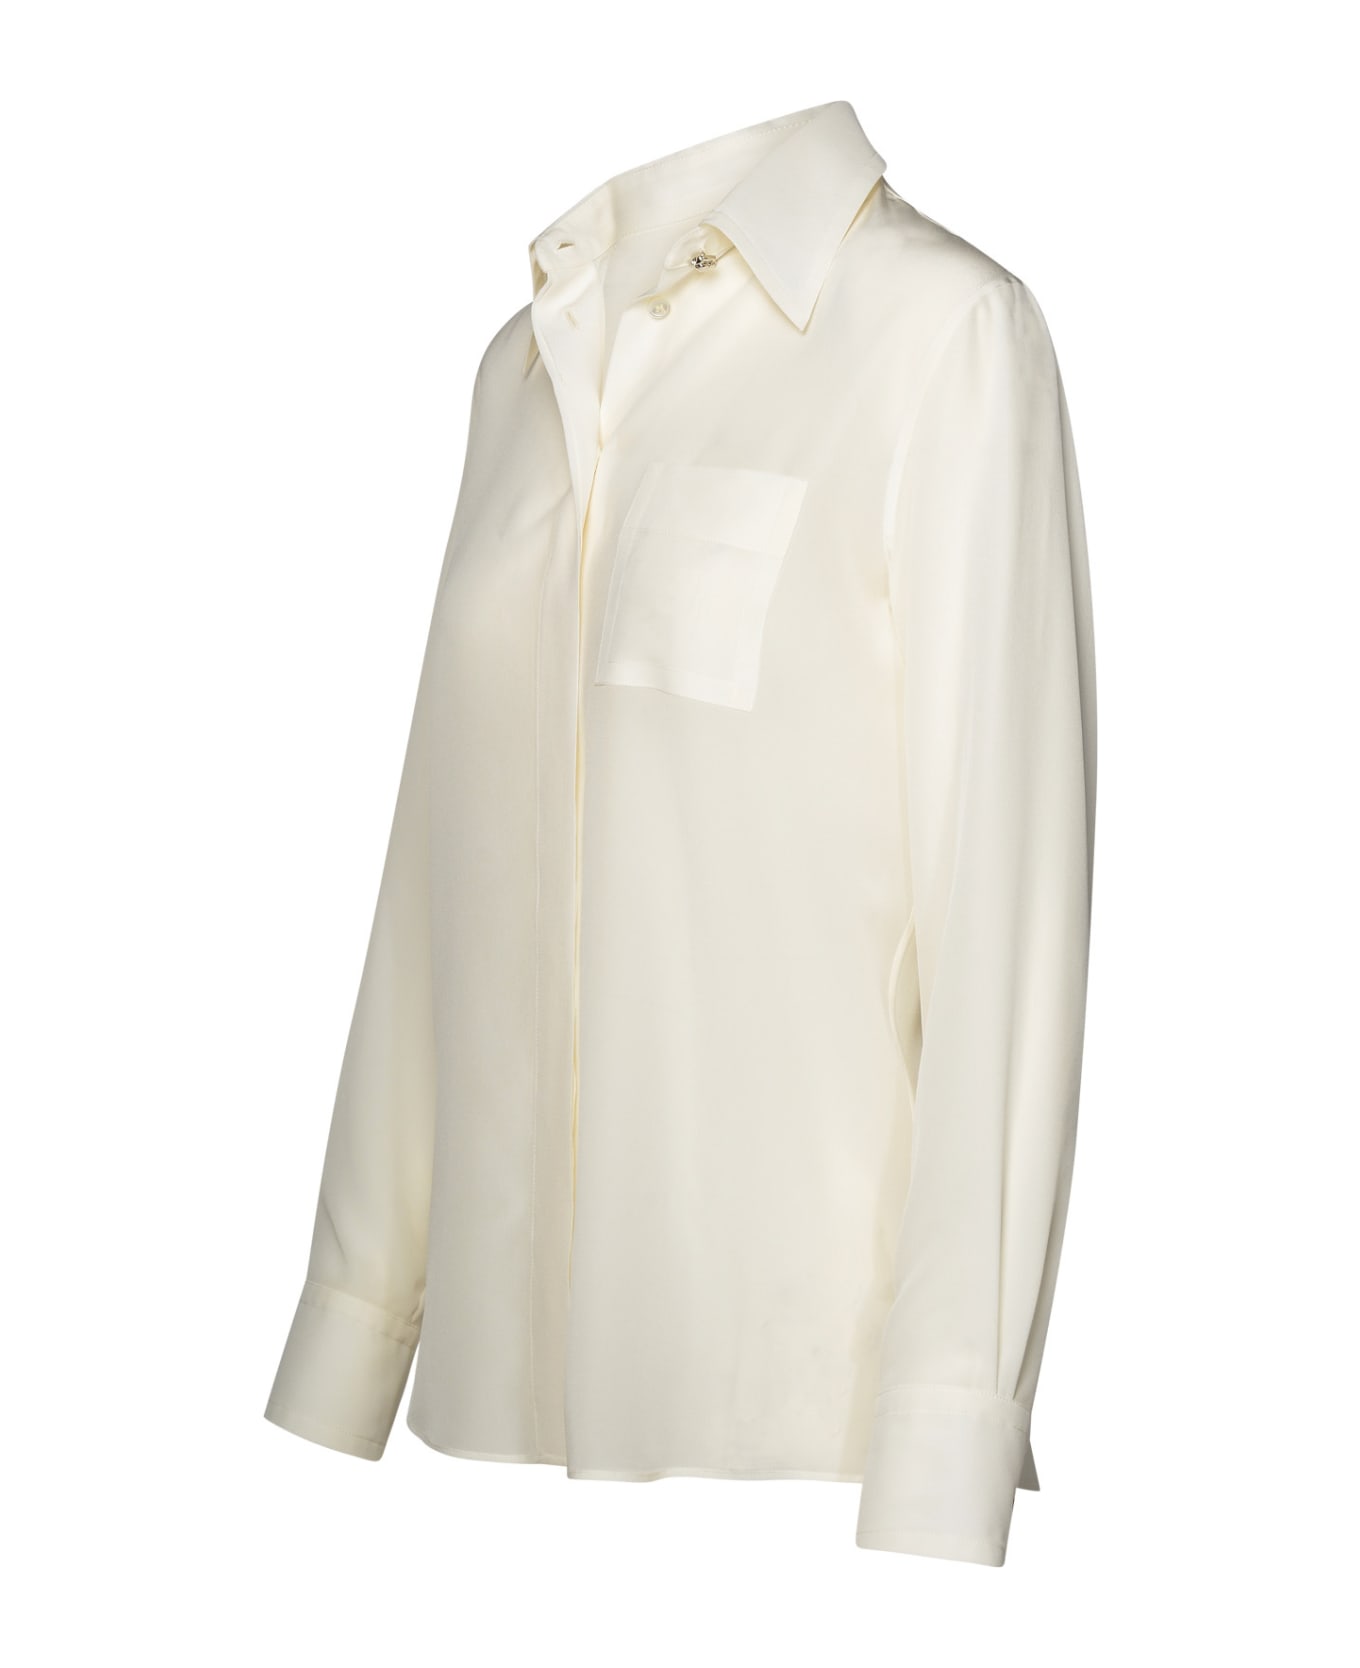 Lanvin White Silk Shirt -  Bianco